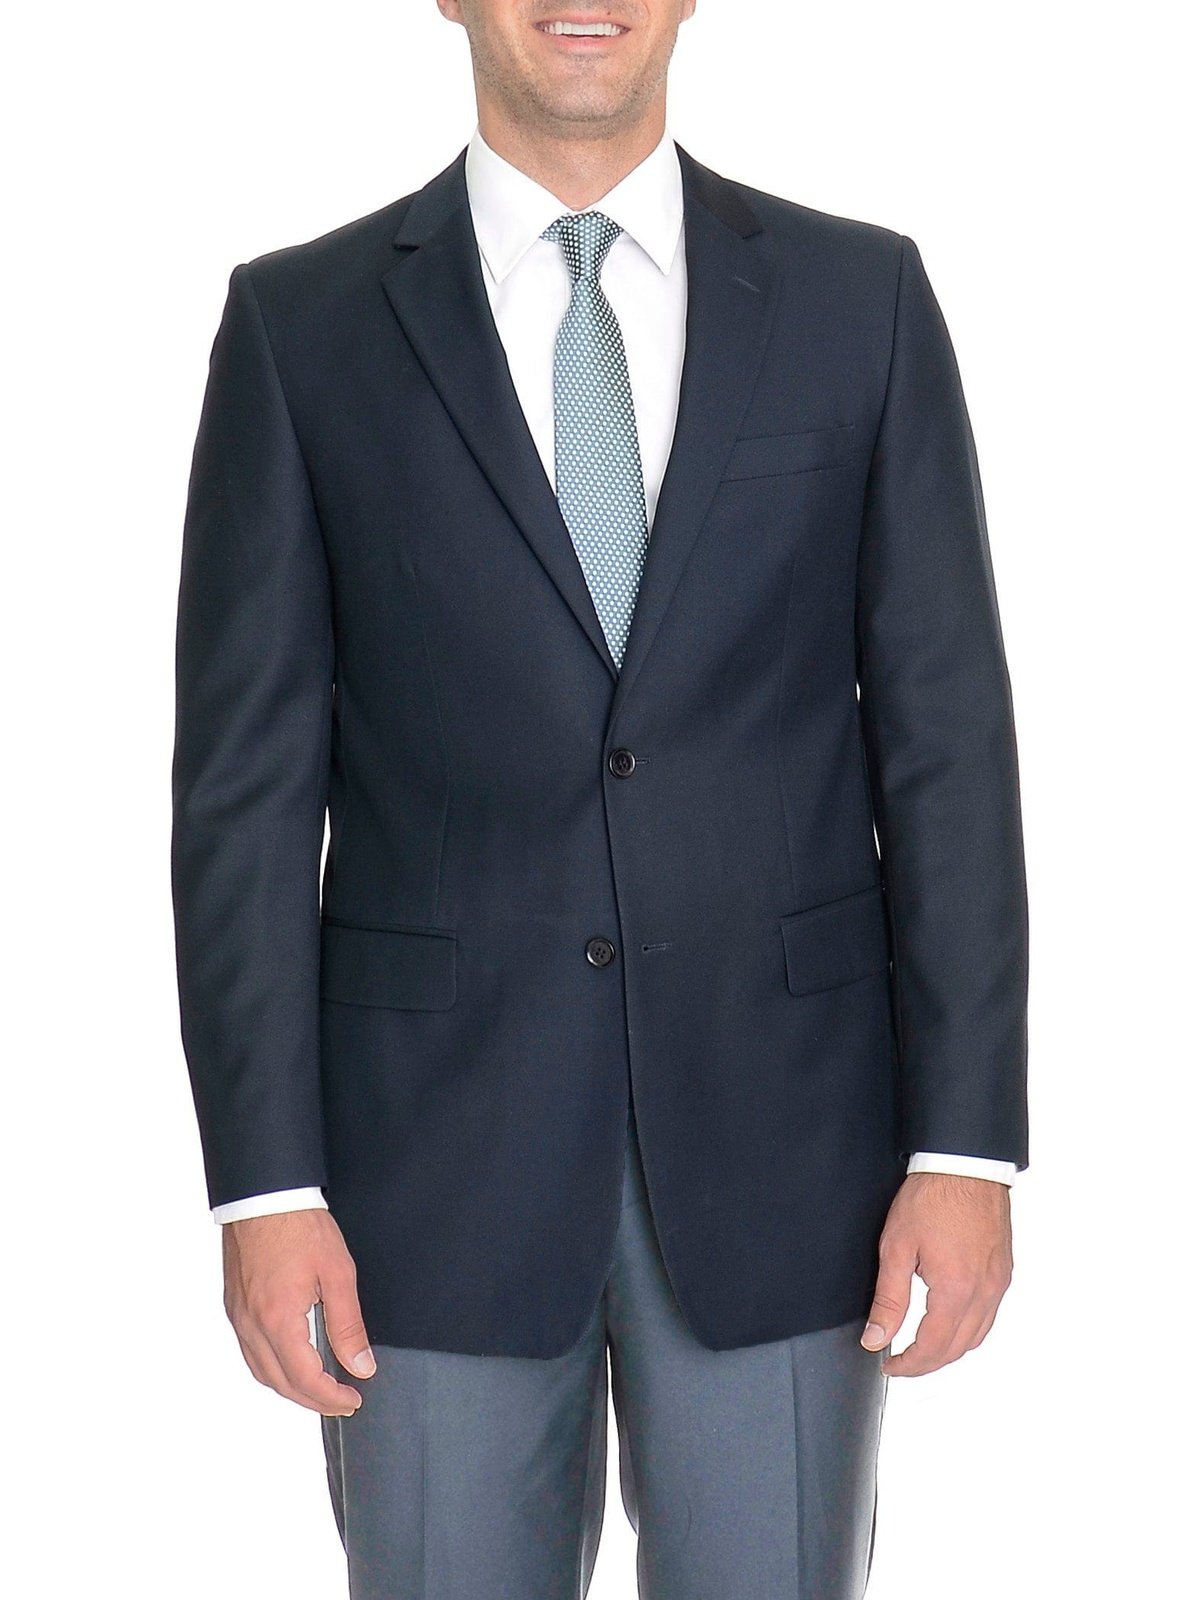 Raphael BLAZERS Raphael Regular Fit Solid Navy Blue Two Button Blazer Suit Jacket